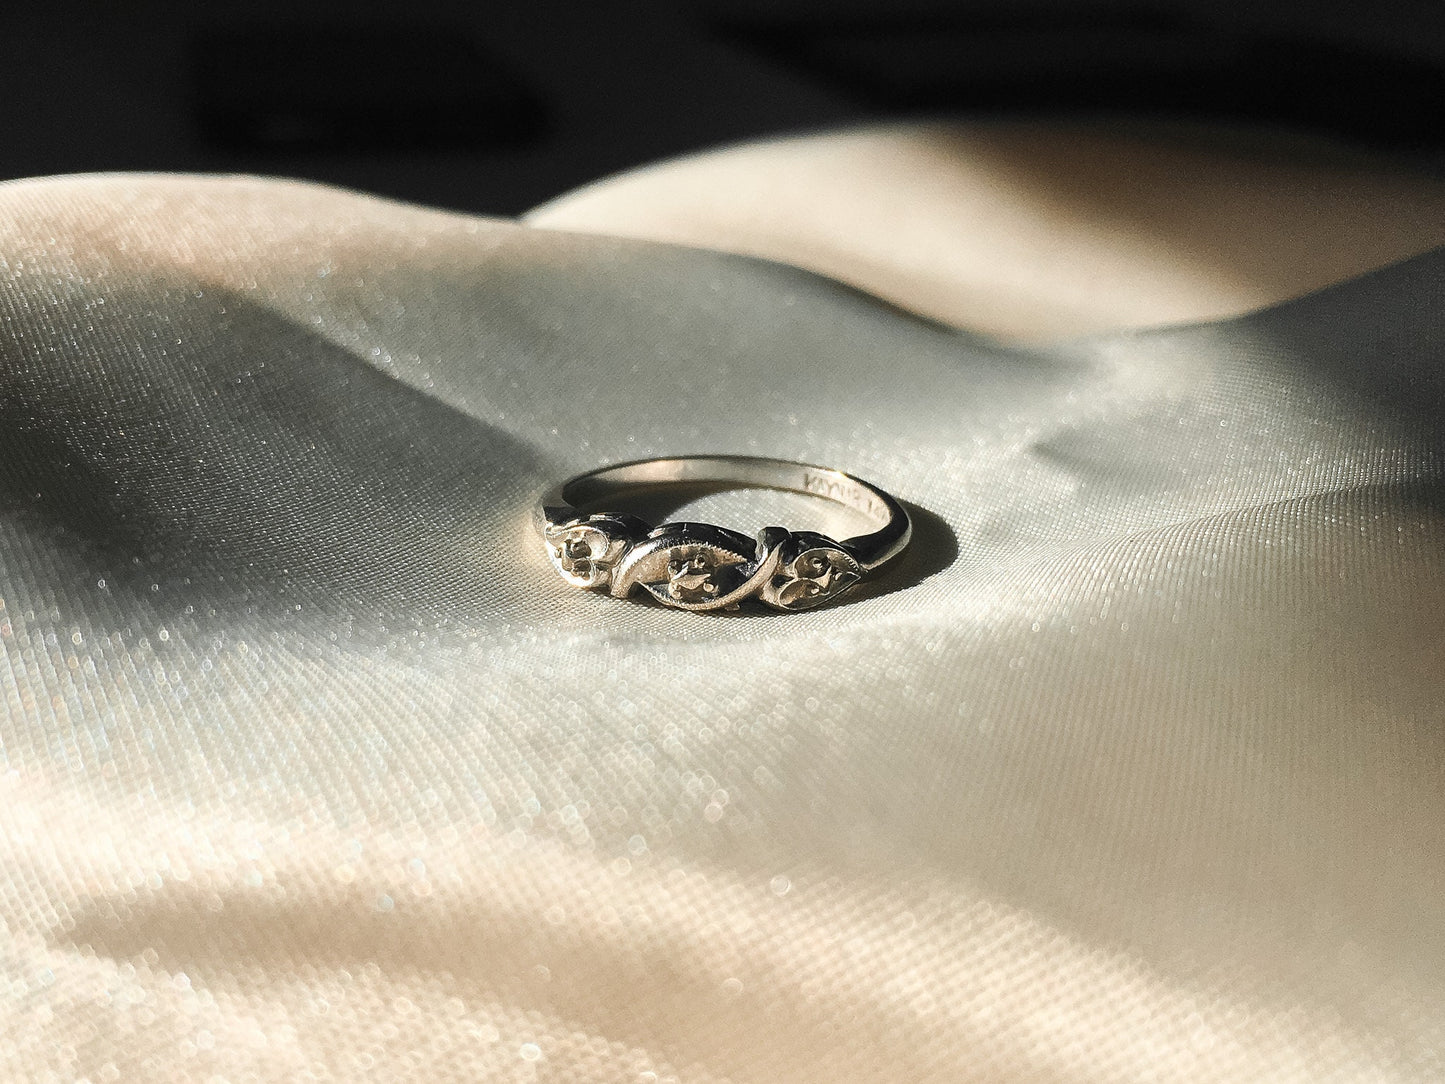 Vintage 14k White Gold Kaynar Ring, Heart Shaped Diamond Accent